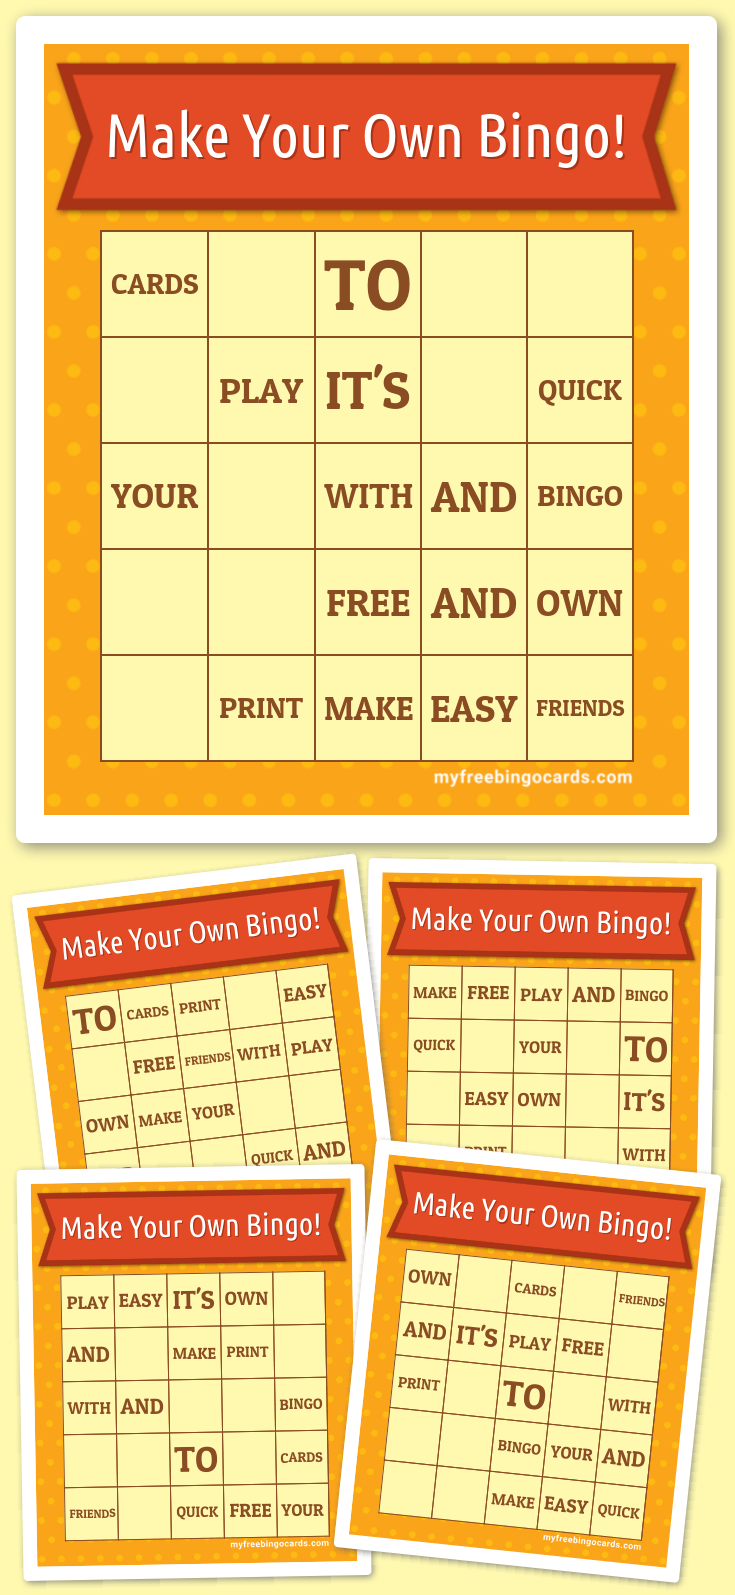 Virtual Make Your Own Bingo!